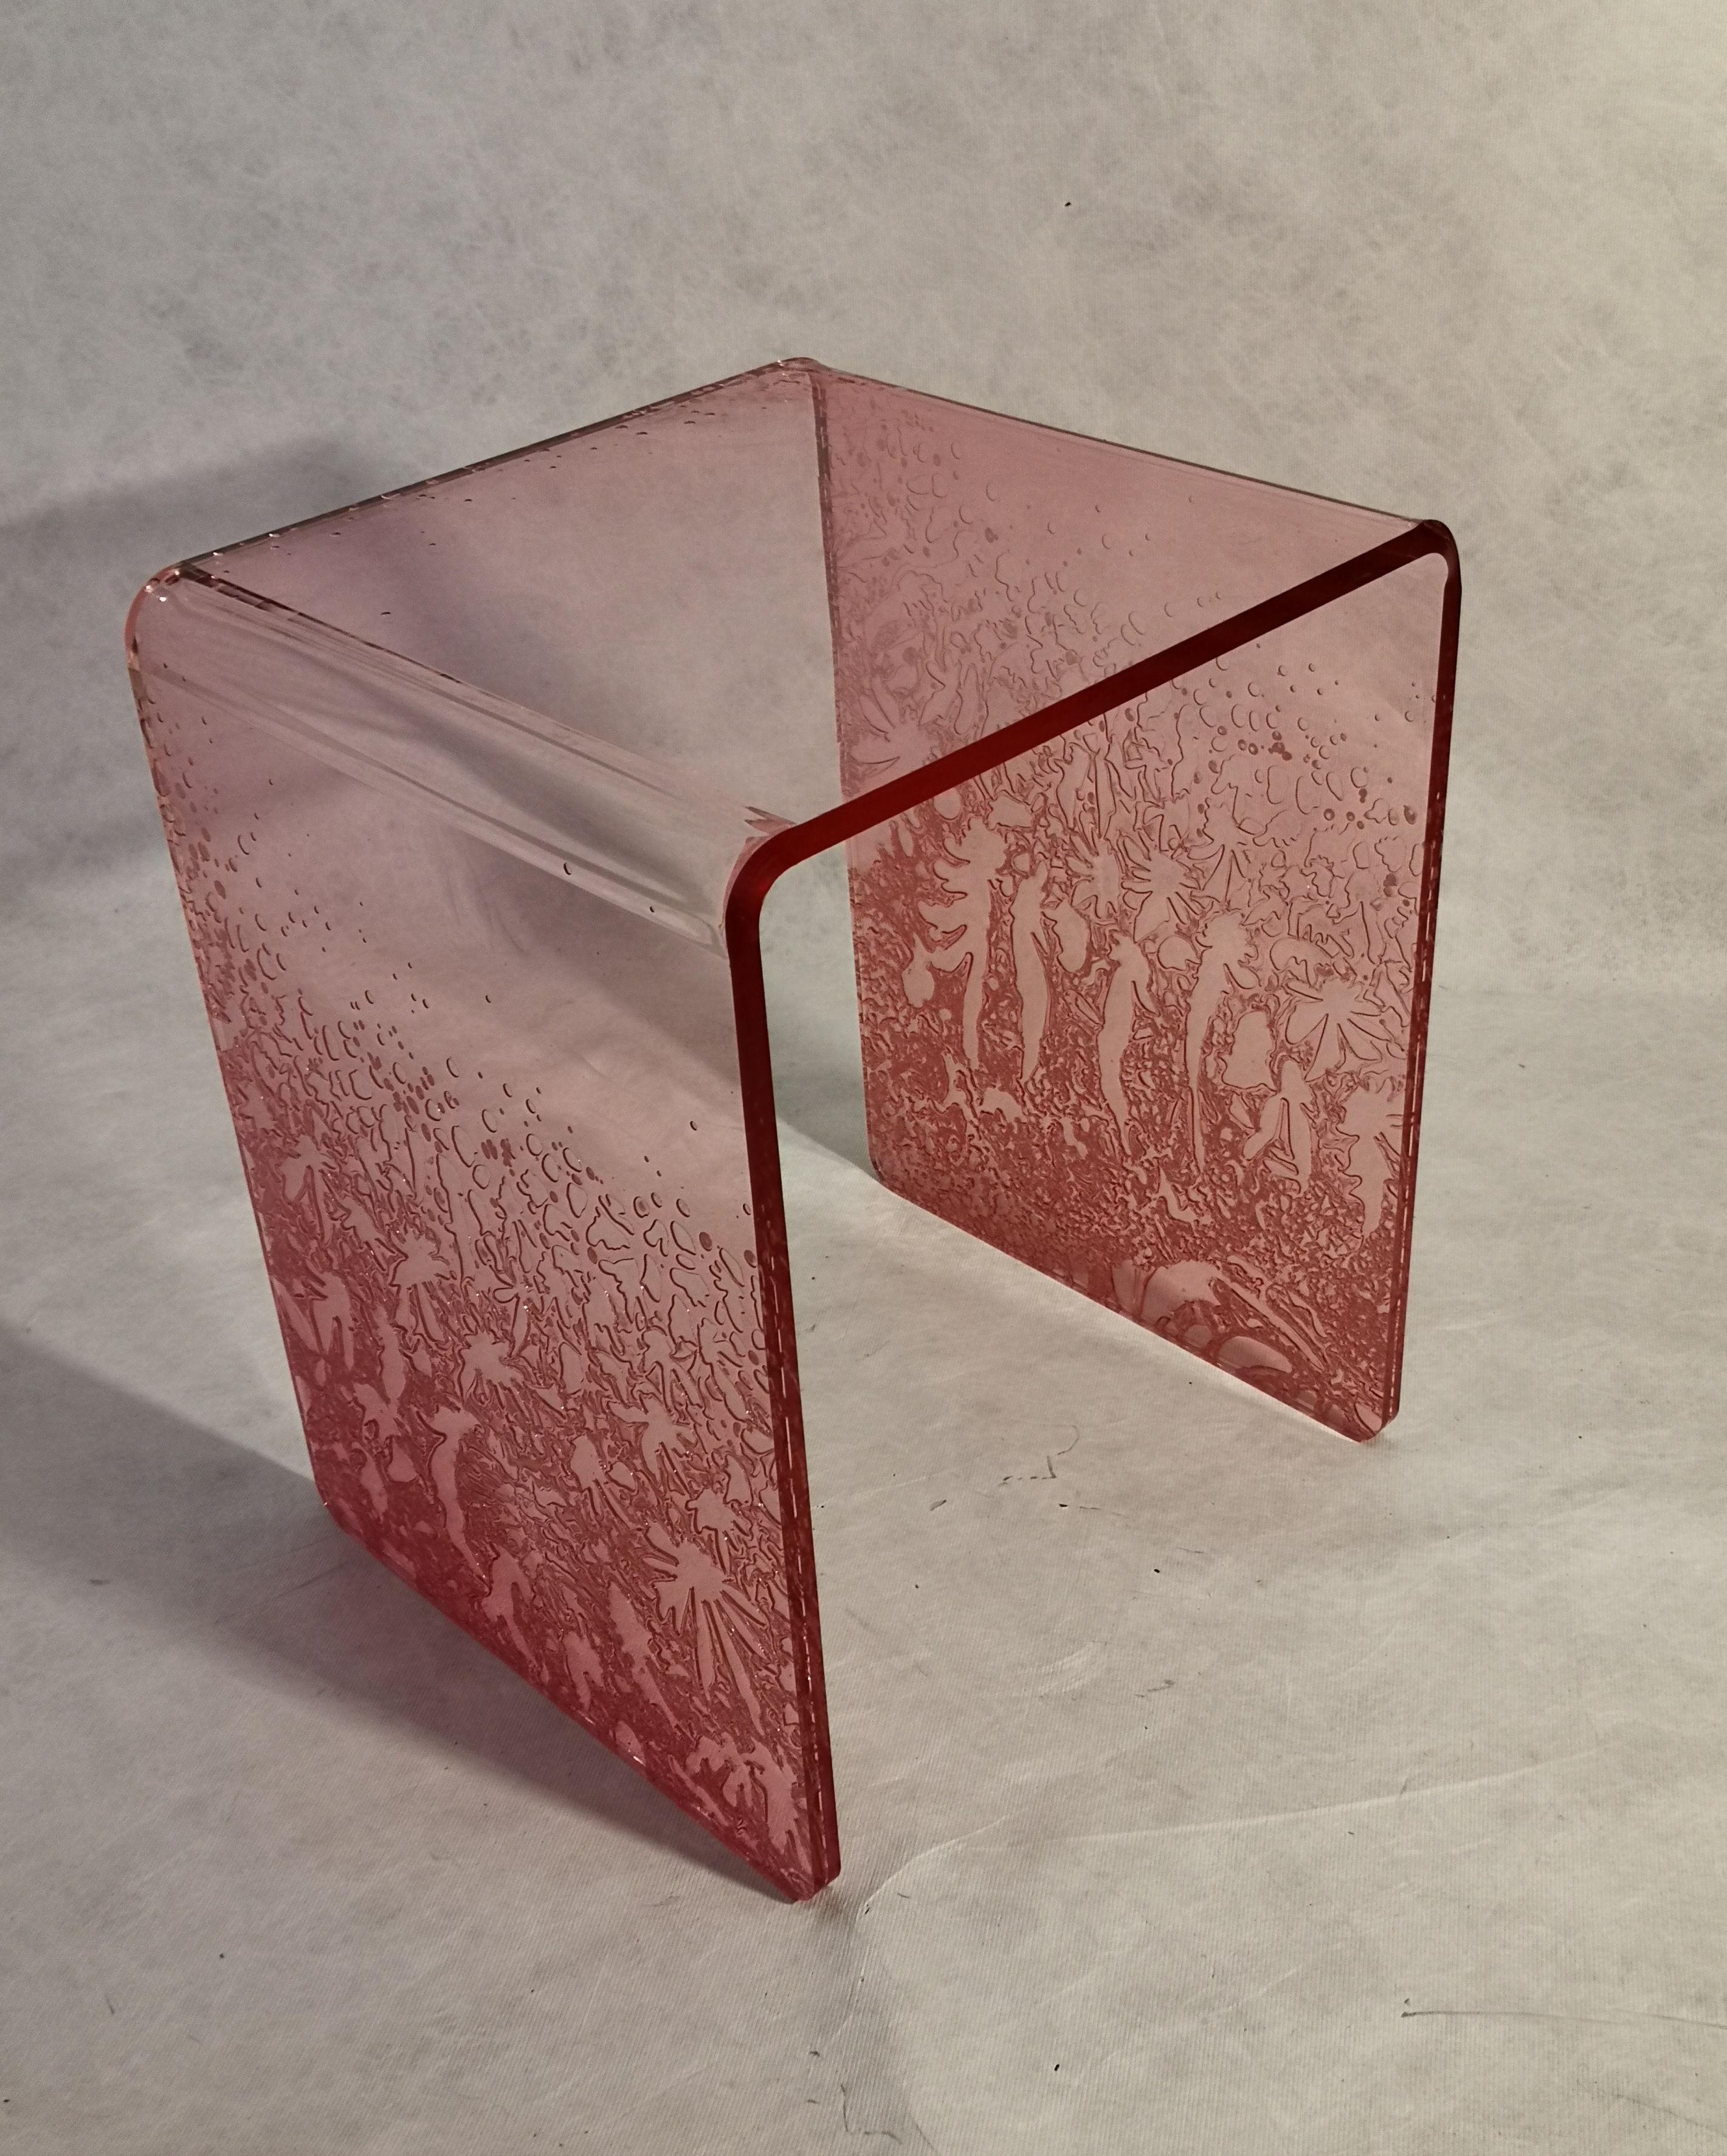 Sketch Mini Ponte Side Table Made of Acrylic Design Roberto Giacomucci 2022 For Sale 1